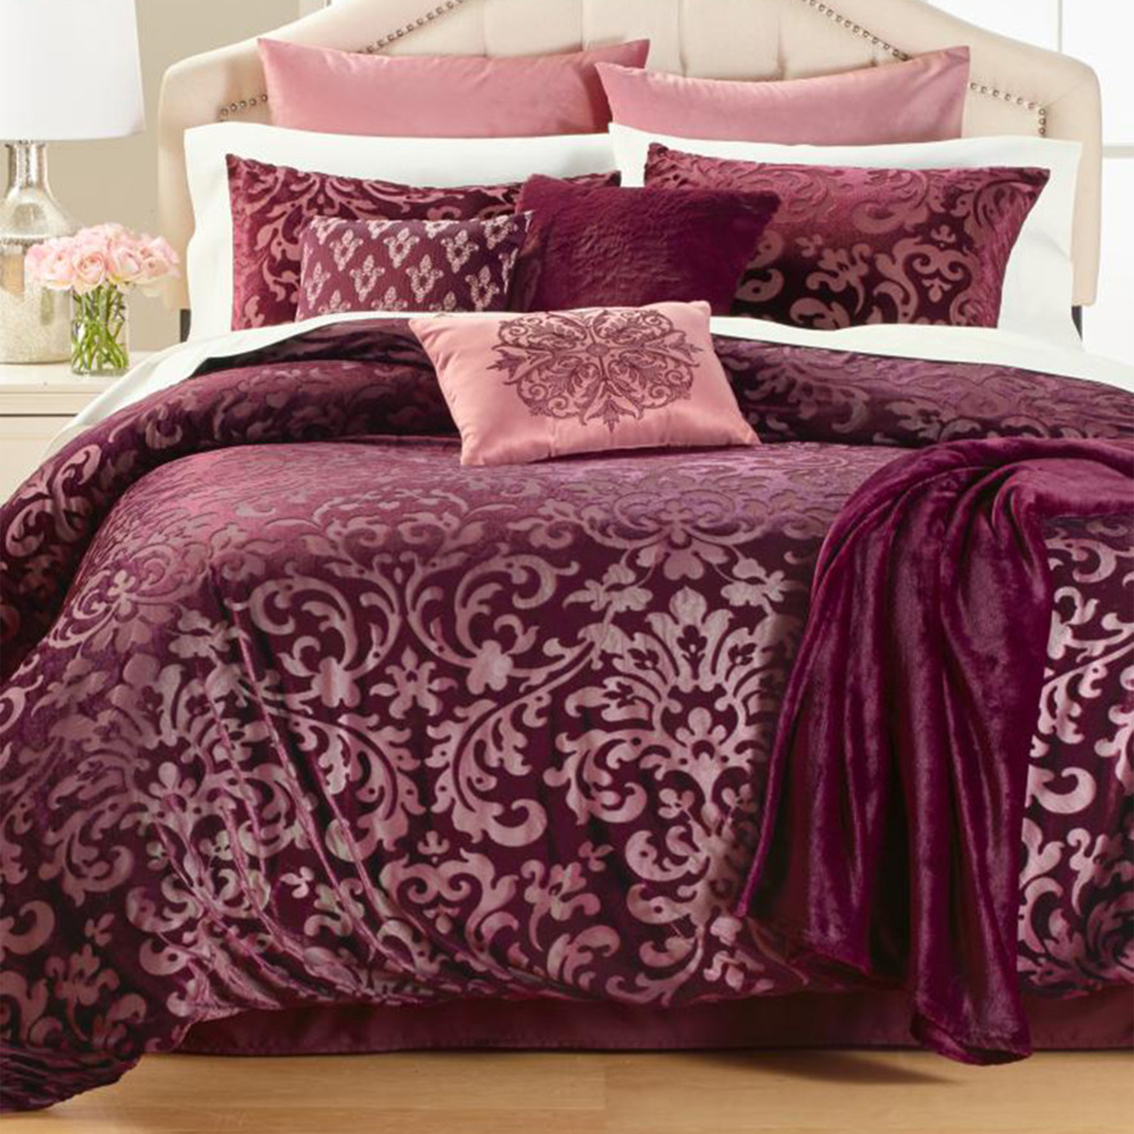 Pc King Comforter Set Bedding Sets, Martha Stewart Duvet Covers King